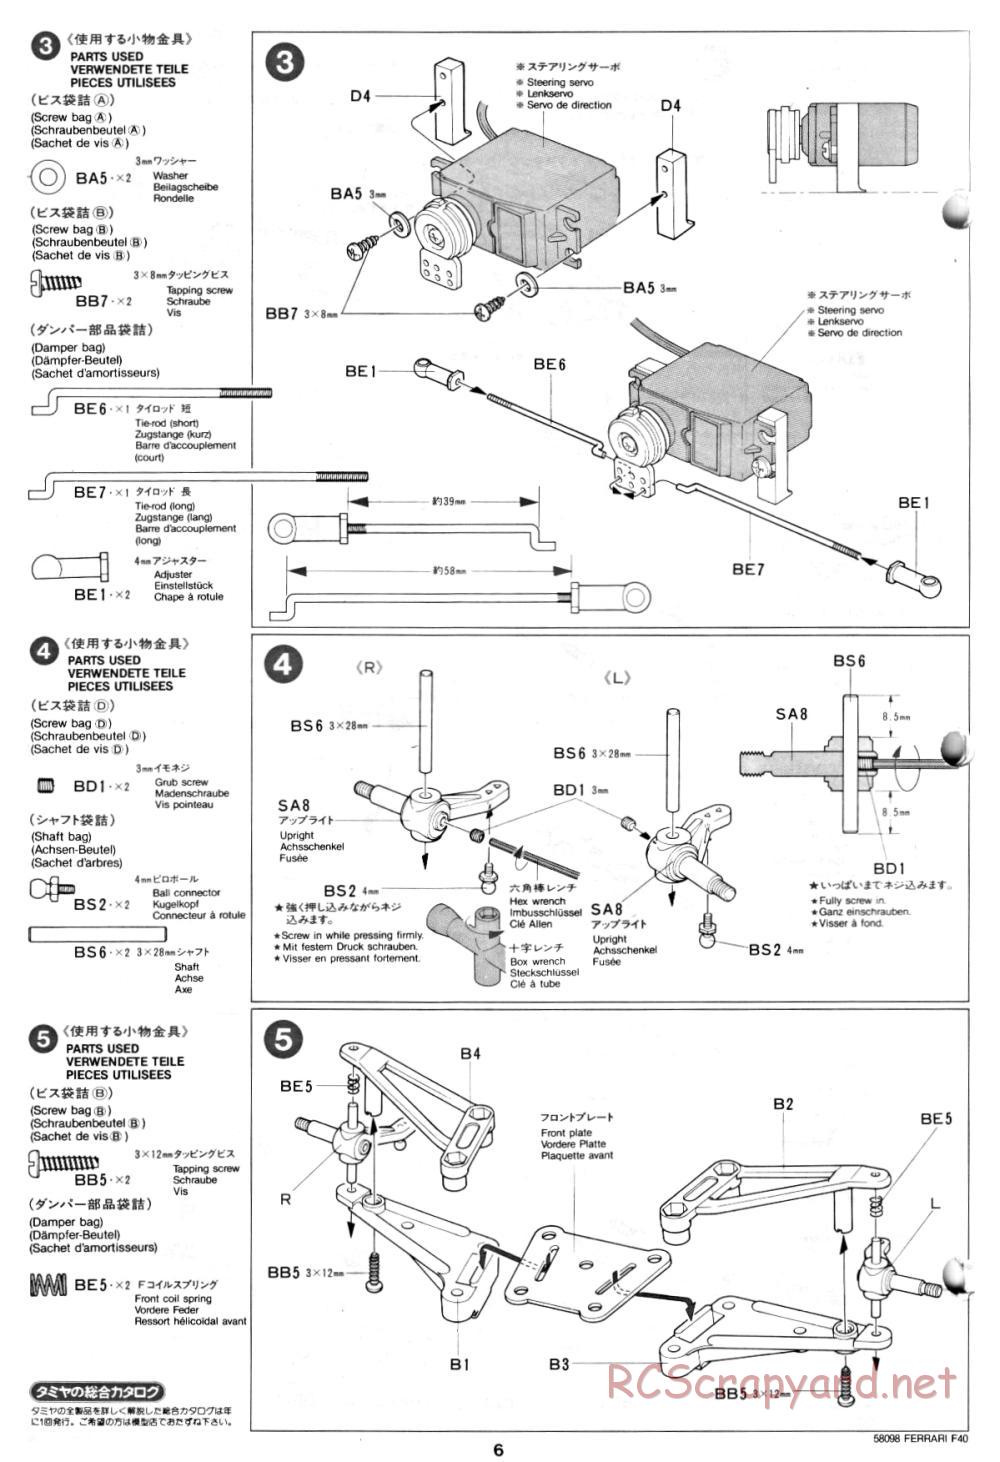 Tamiya - Ferrari F40 - 58098 - Manual - Page 6